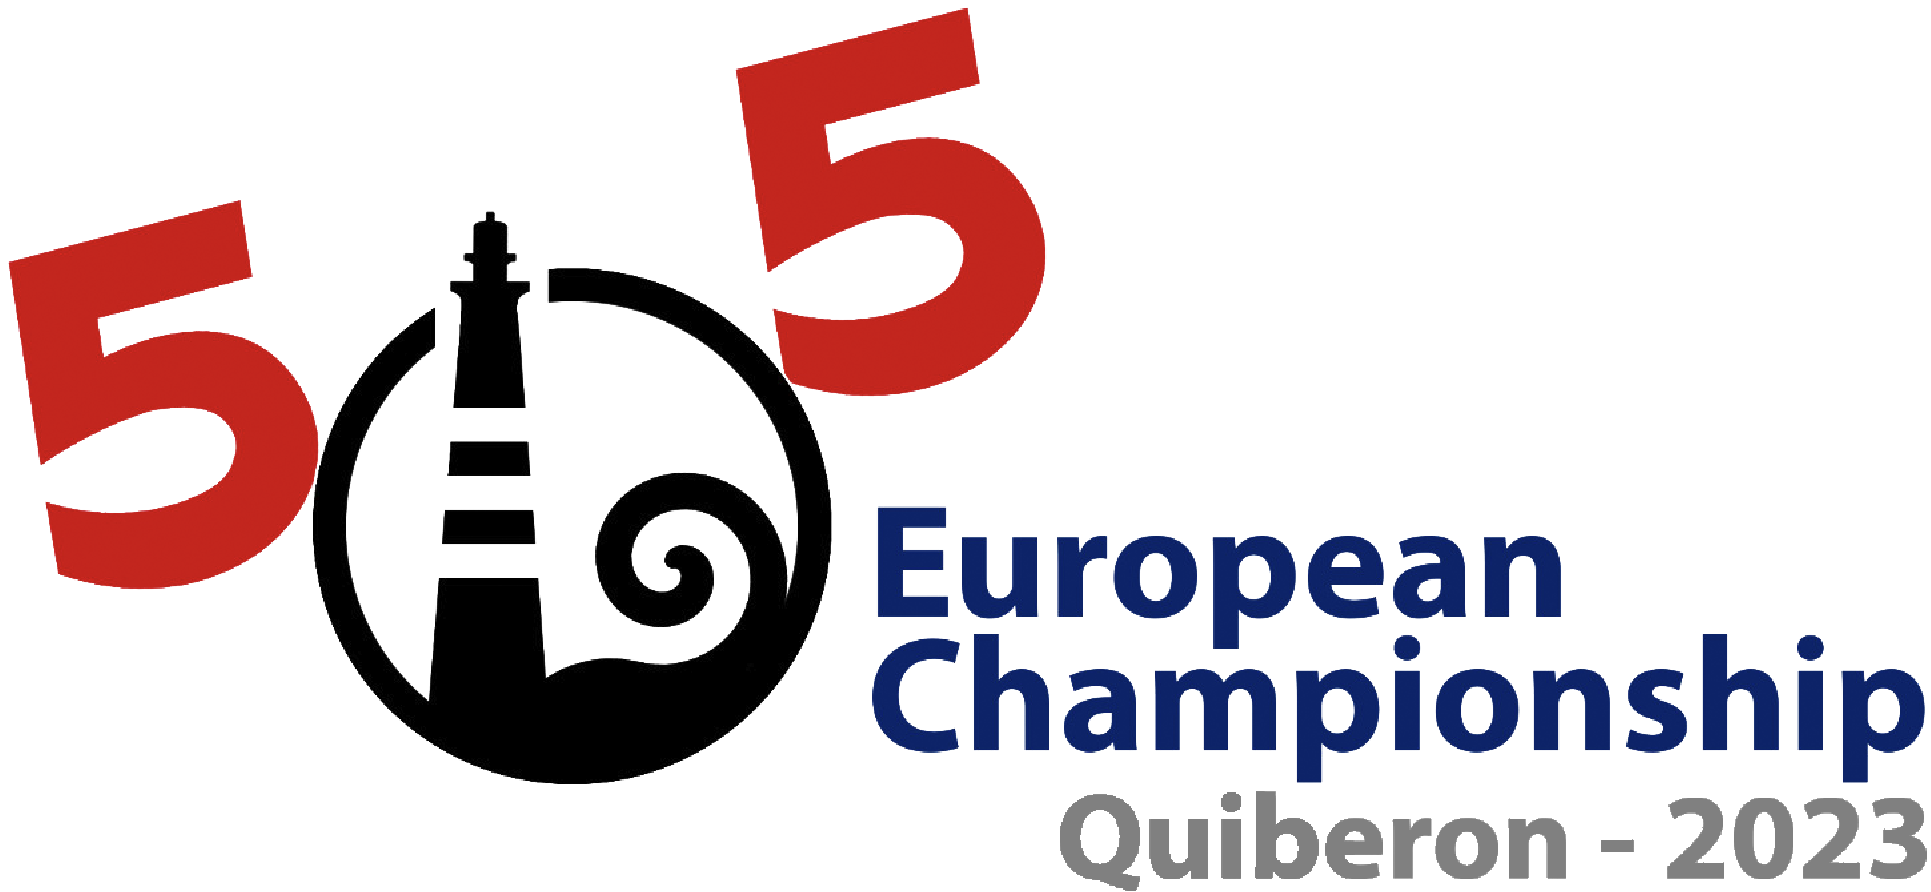 505 European Championship 2023